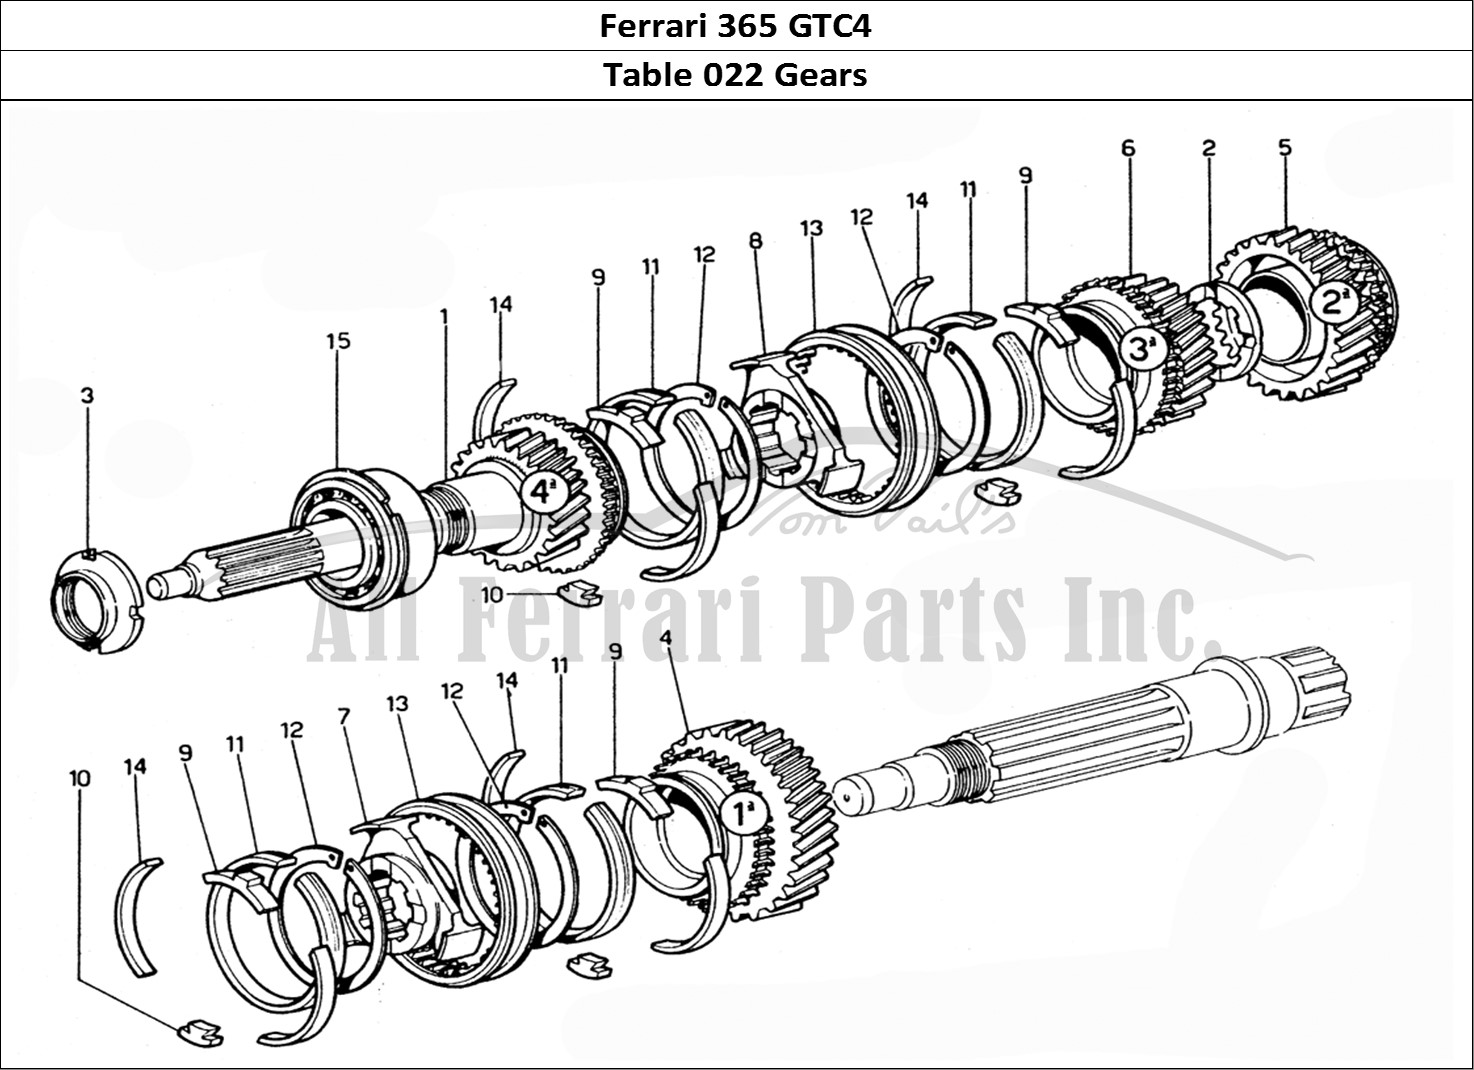 Ferrari Parts Ferrari 365 GTC4 (Mechanical) Page 022 Gears